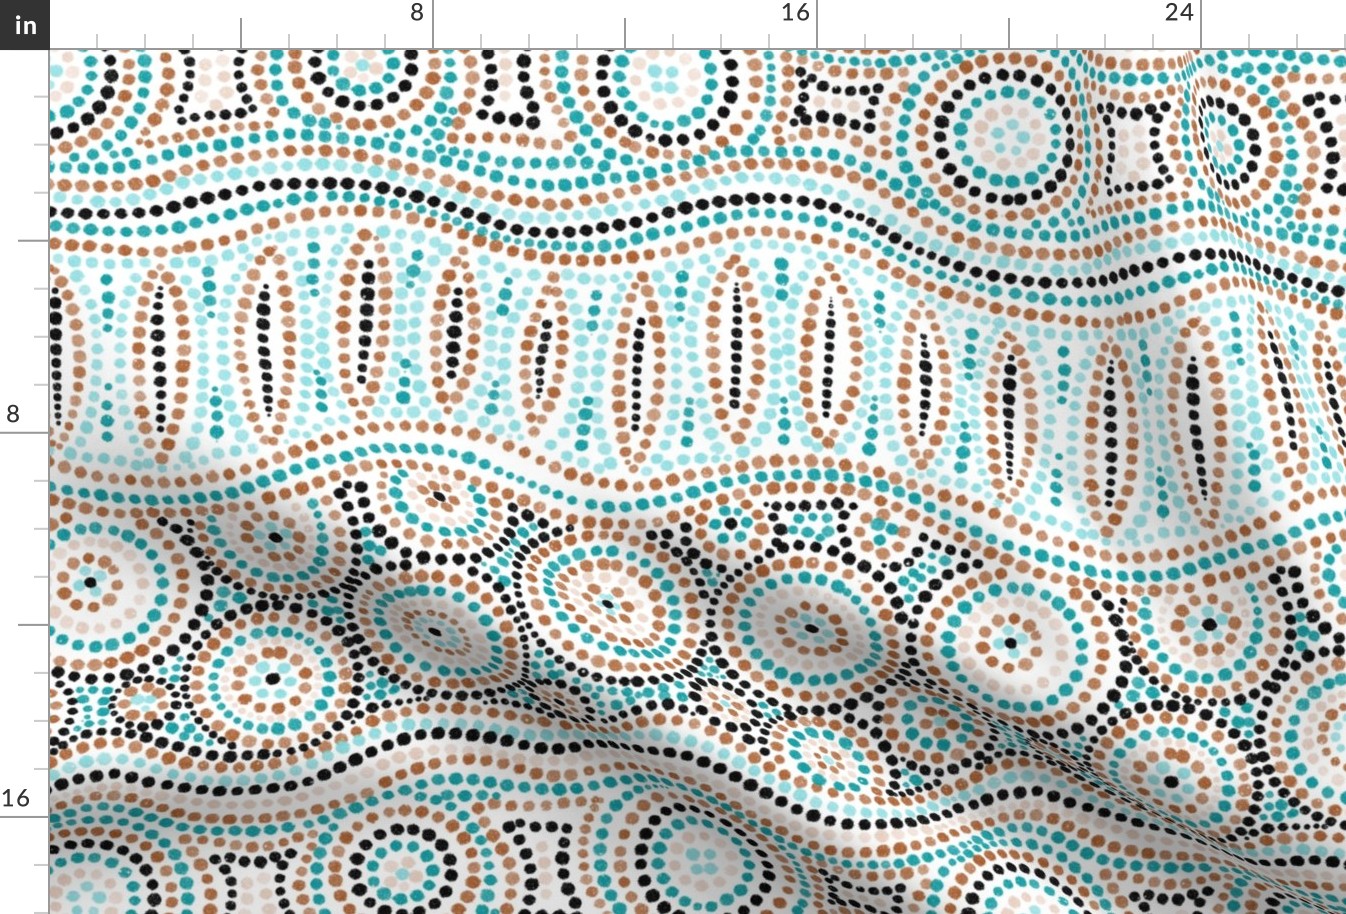 Aussie Tribal Print (peacock- aqua - bronze - beige - white) 18"